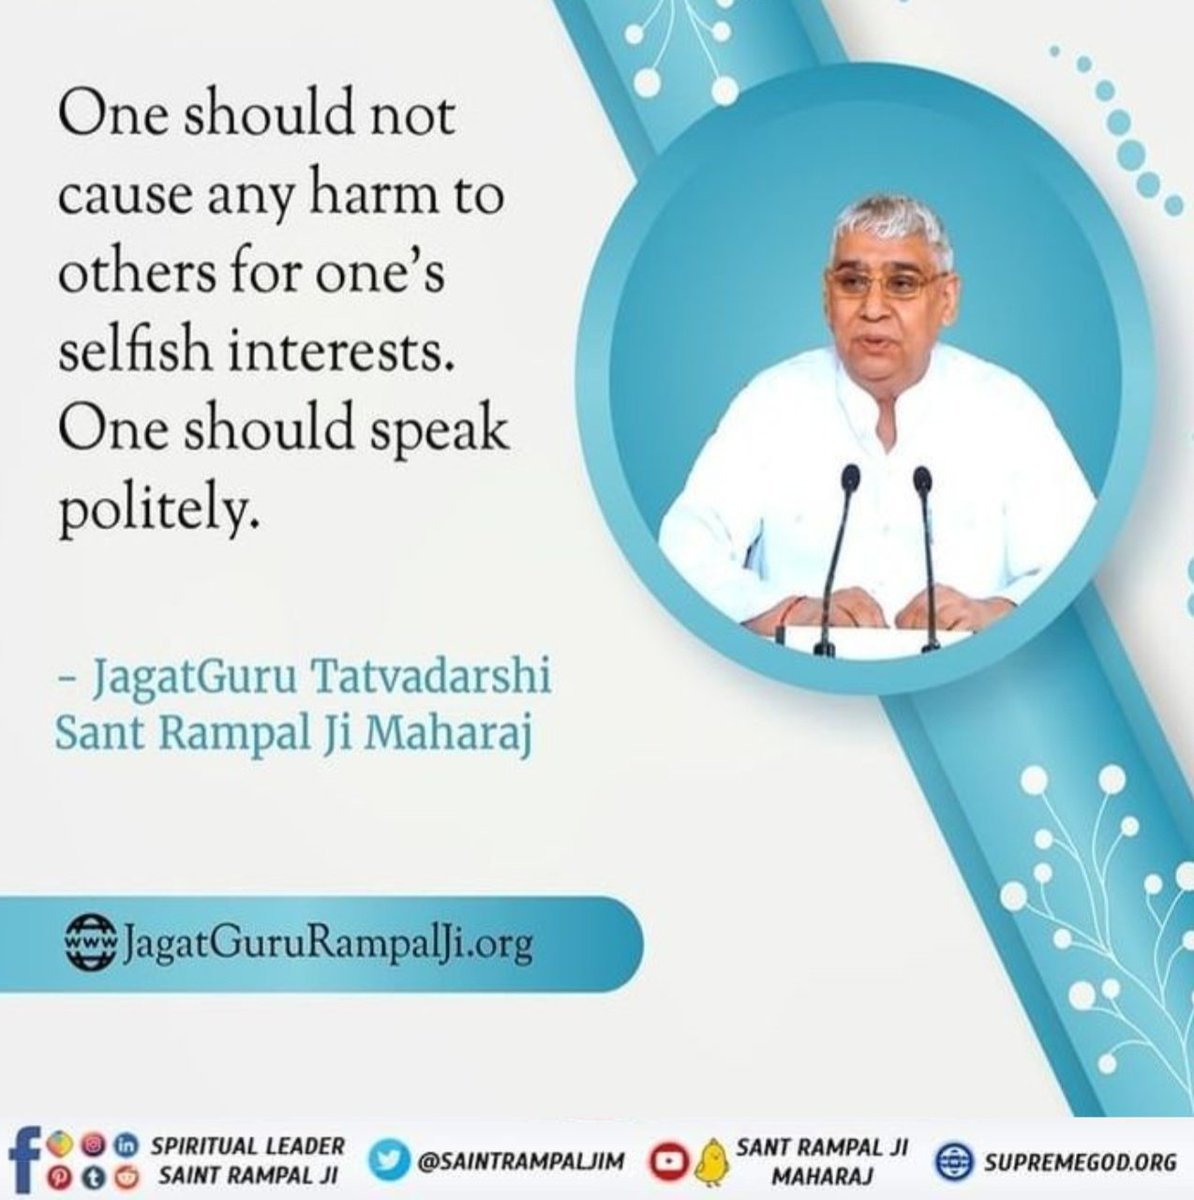 #GodMorningTuesday
🪴🪴
One should not cause any harm to others for one's selfish interests.
One should speak politely.
🙇🙇
- JagatGuru Tatvadarshi Sant Rampal Ji Maharaj